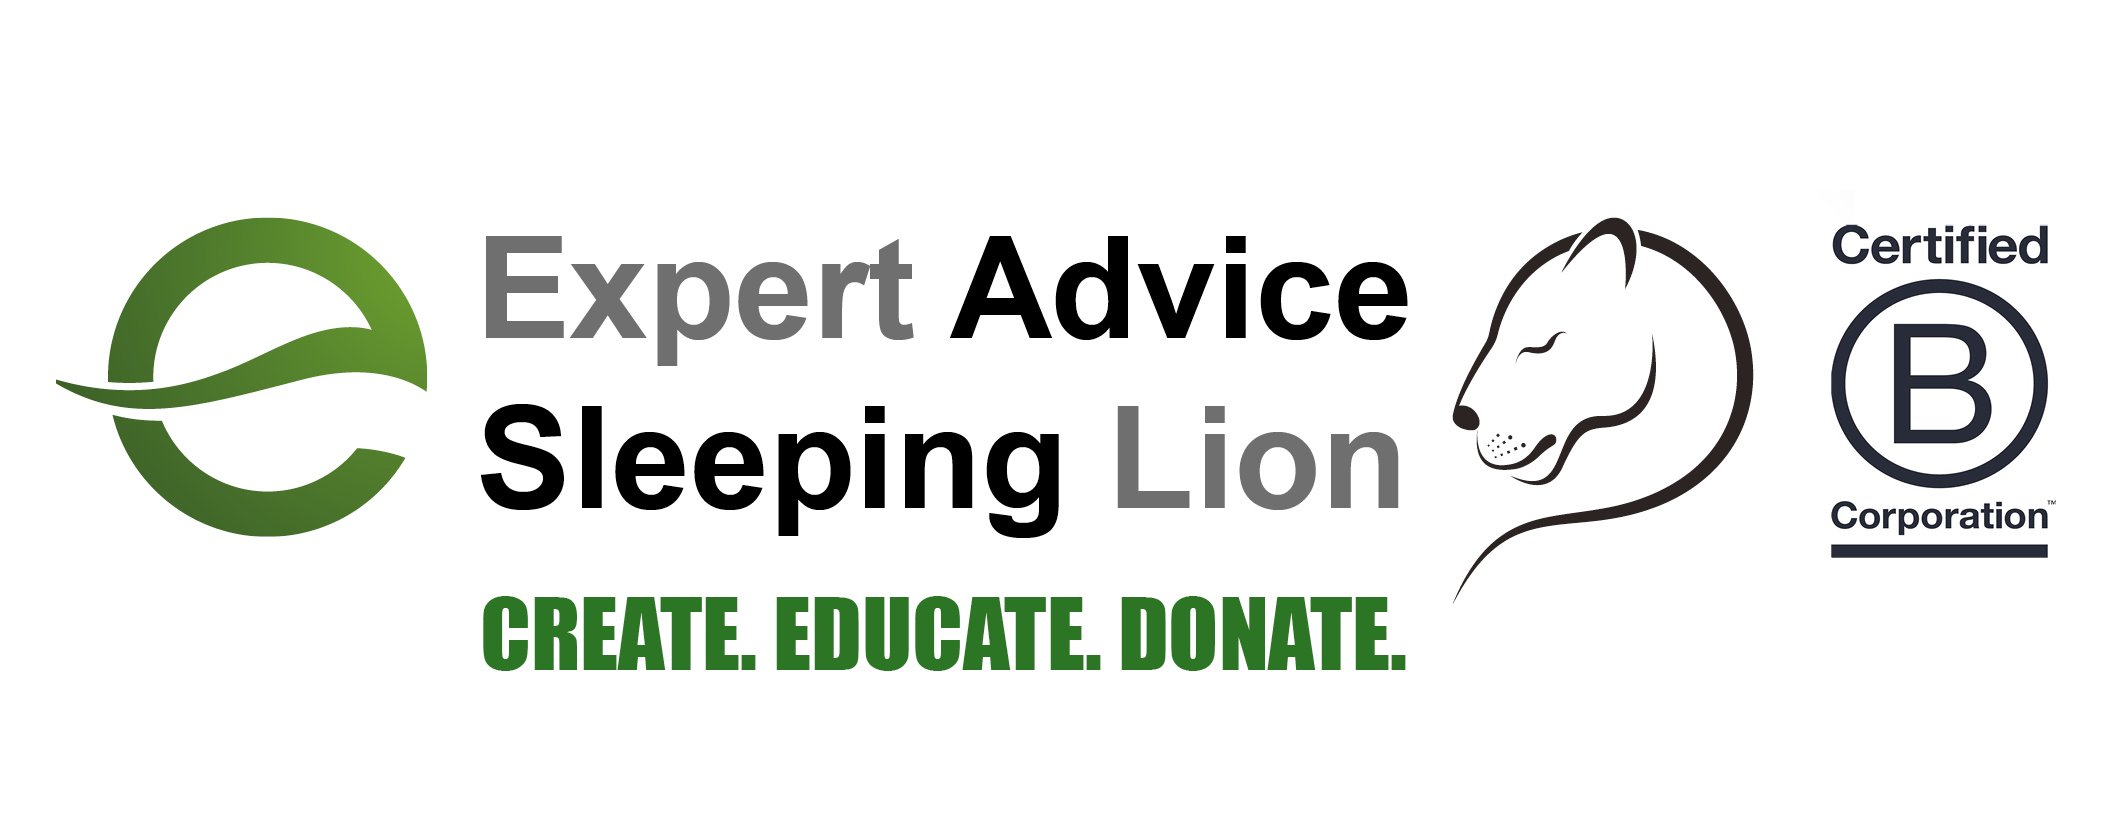 Expert Advice / Sleeping Lion logo